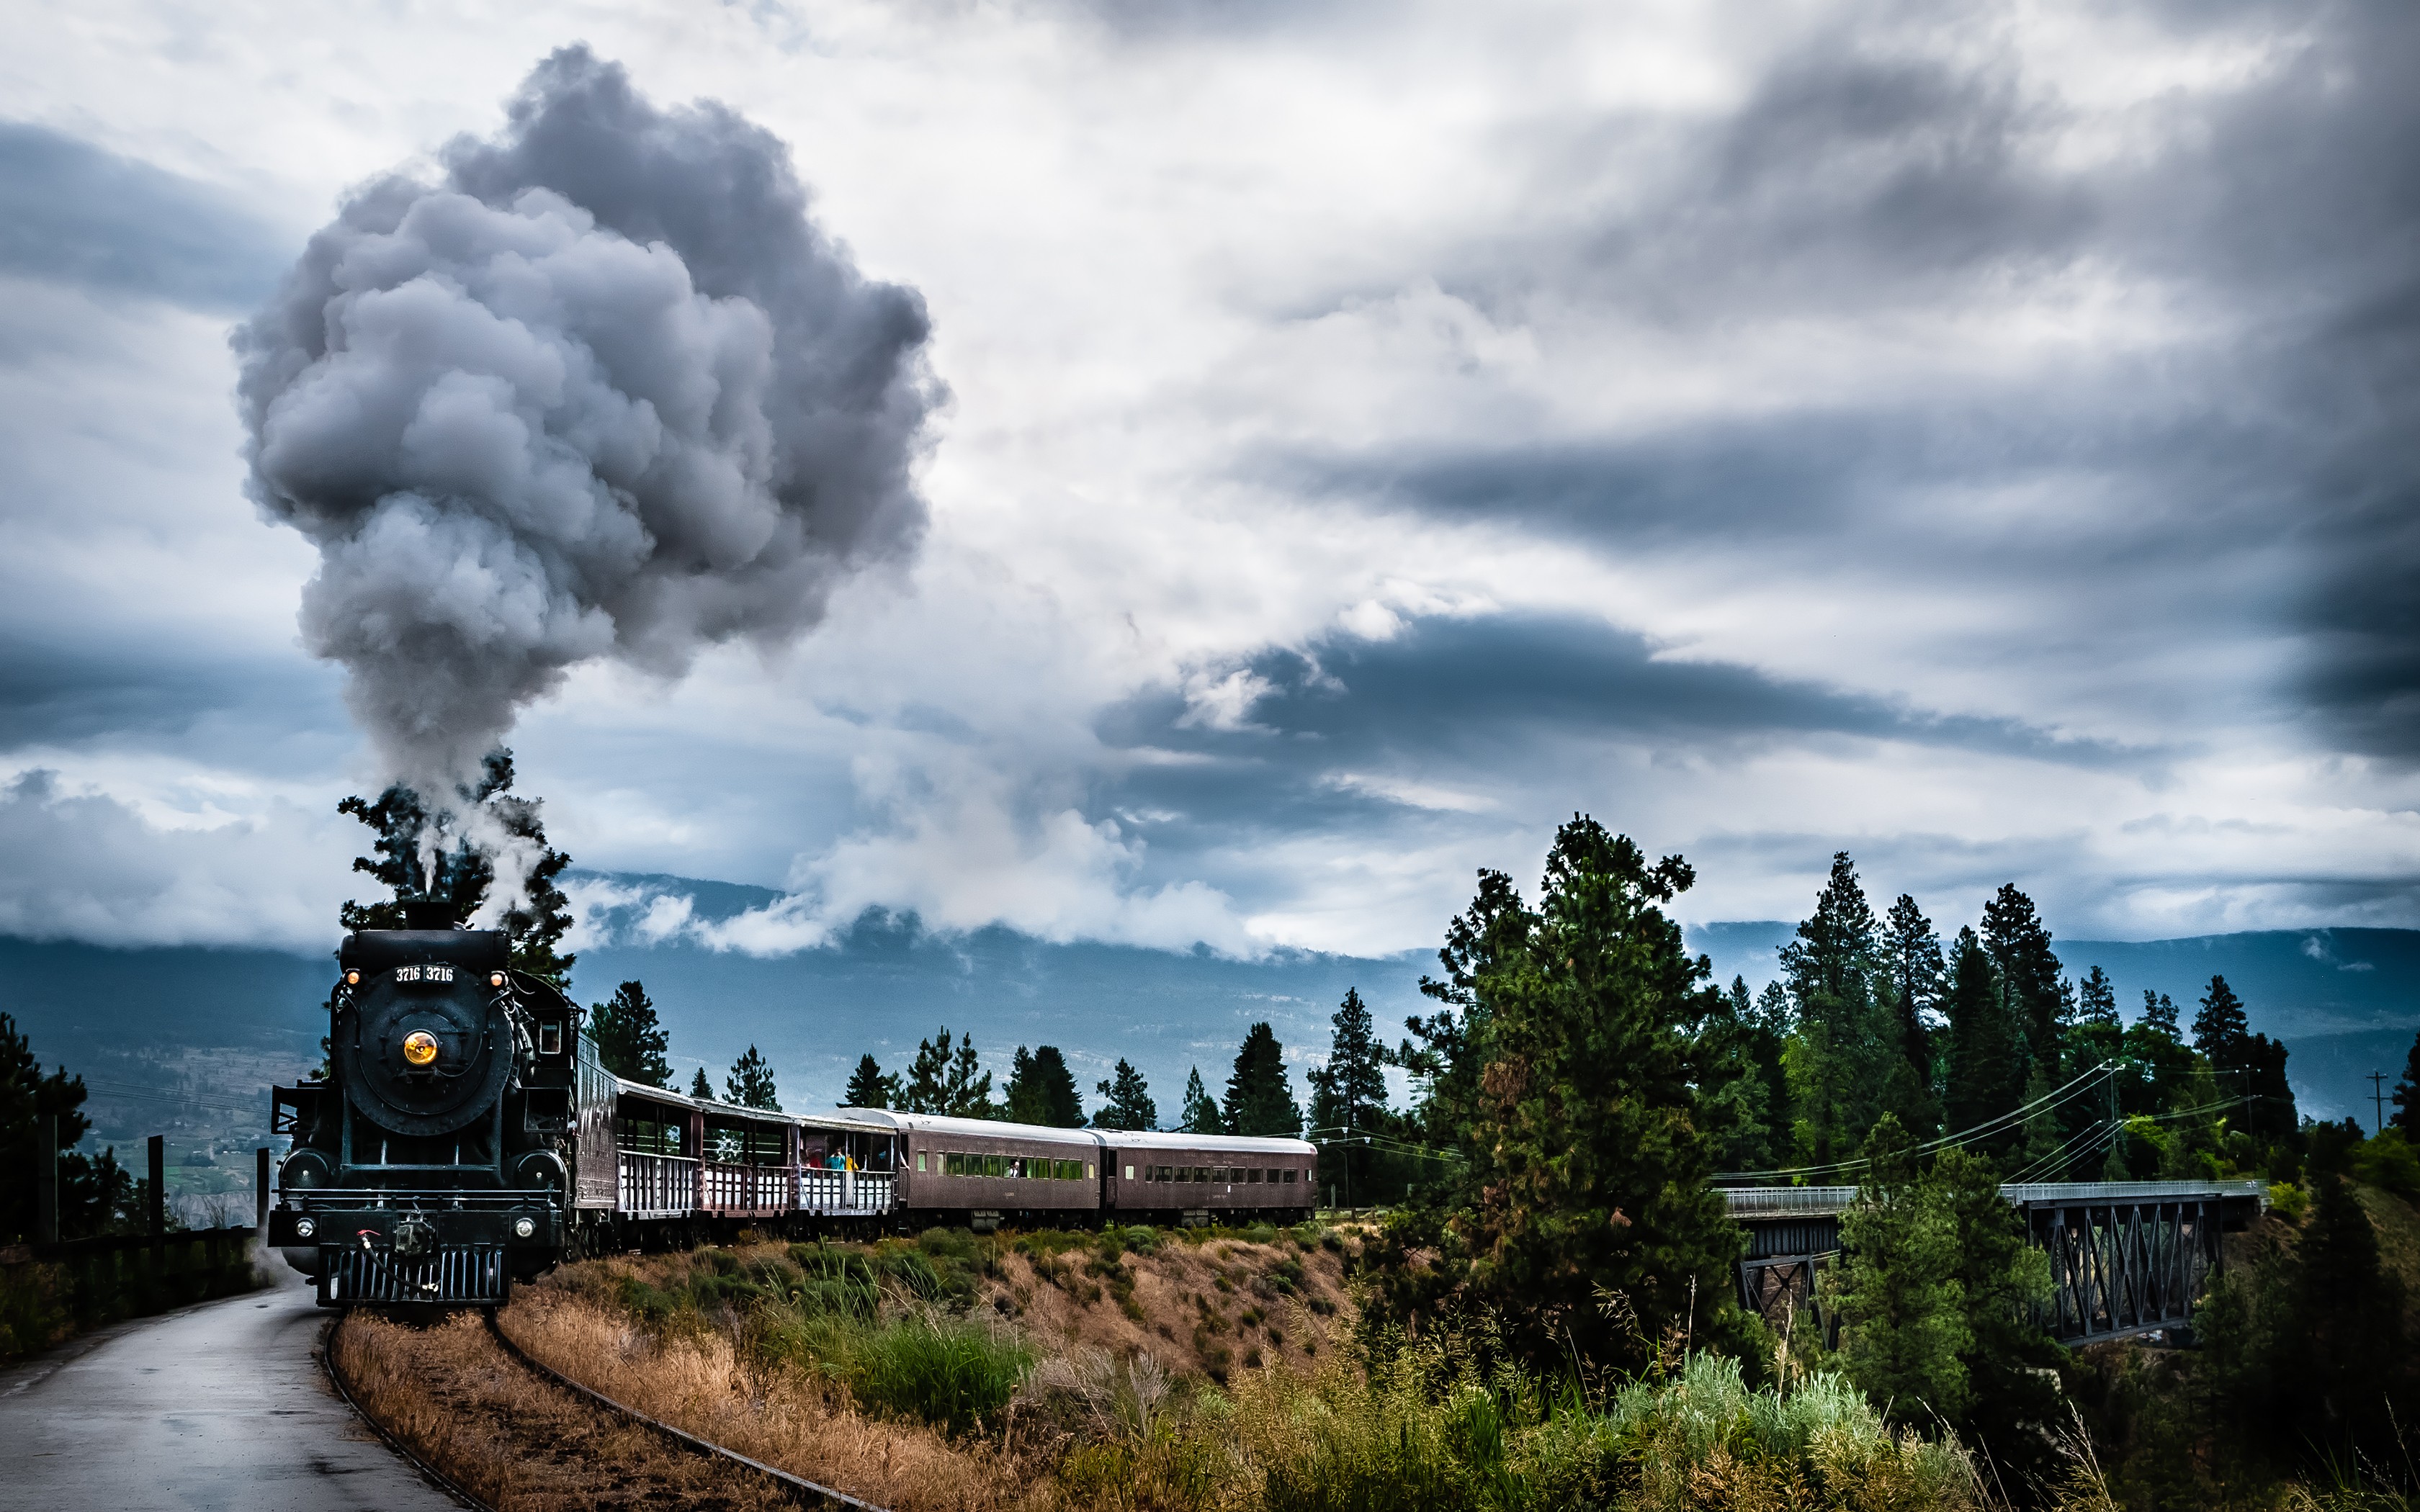 General 3360x2100 train machine smoke trees clouds bridge railway steam locomotive vehicle Steam Train locomotive outdoors